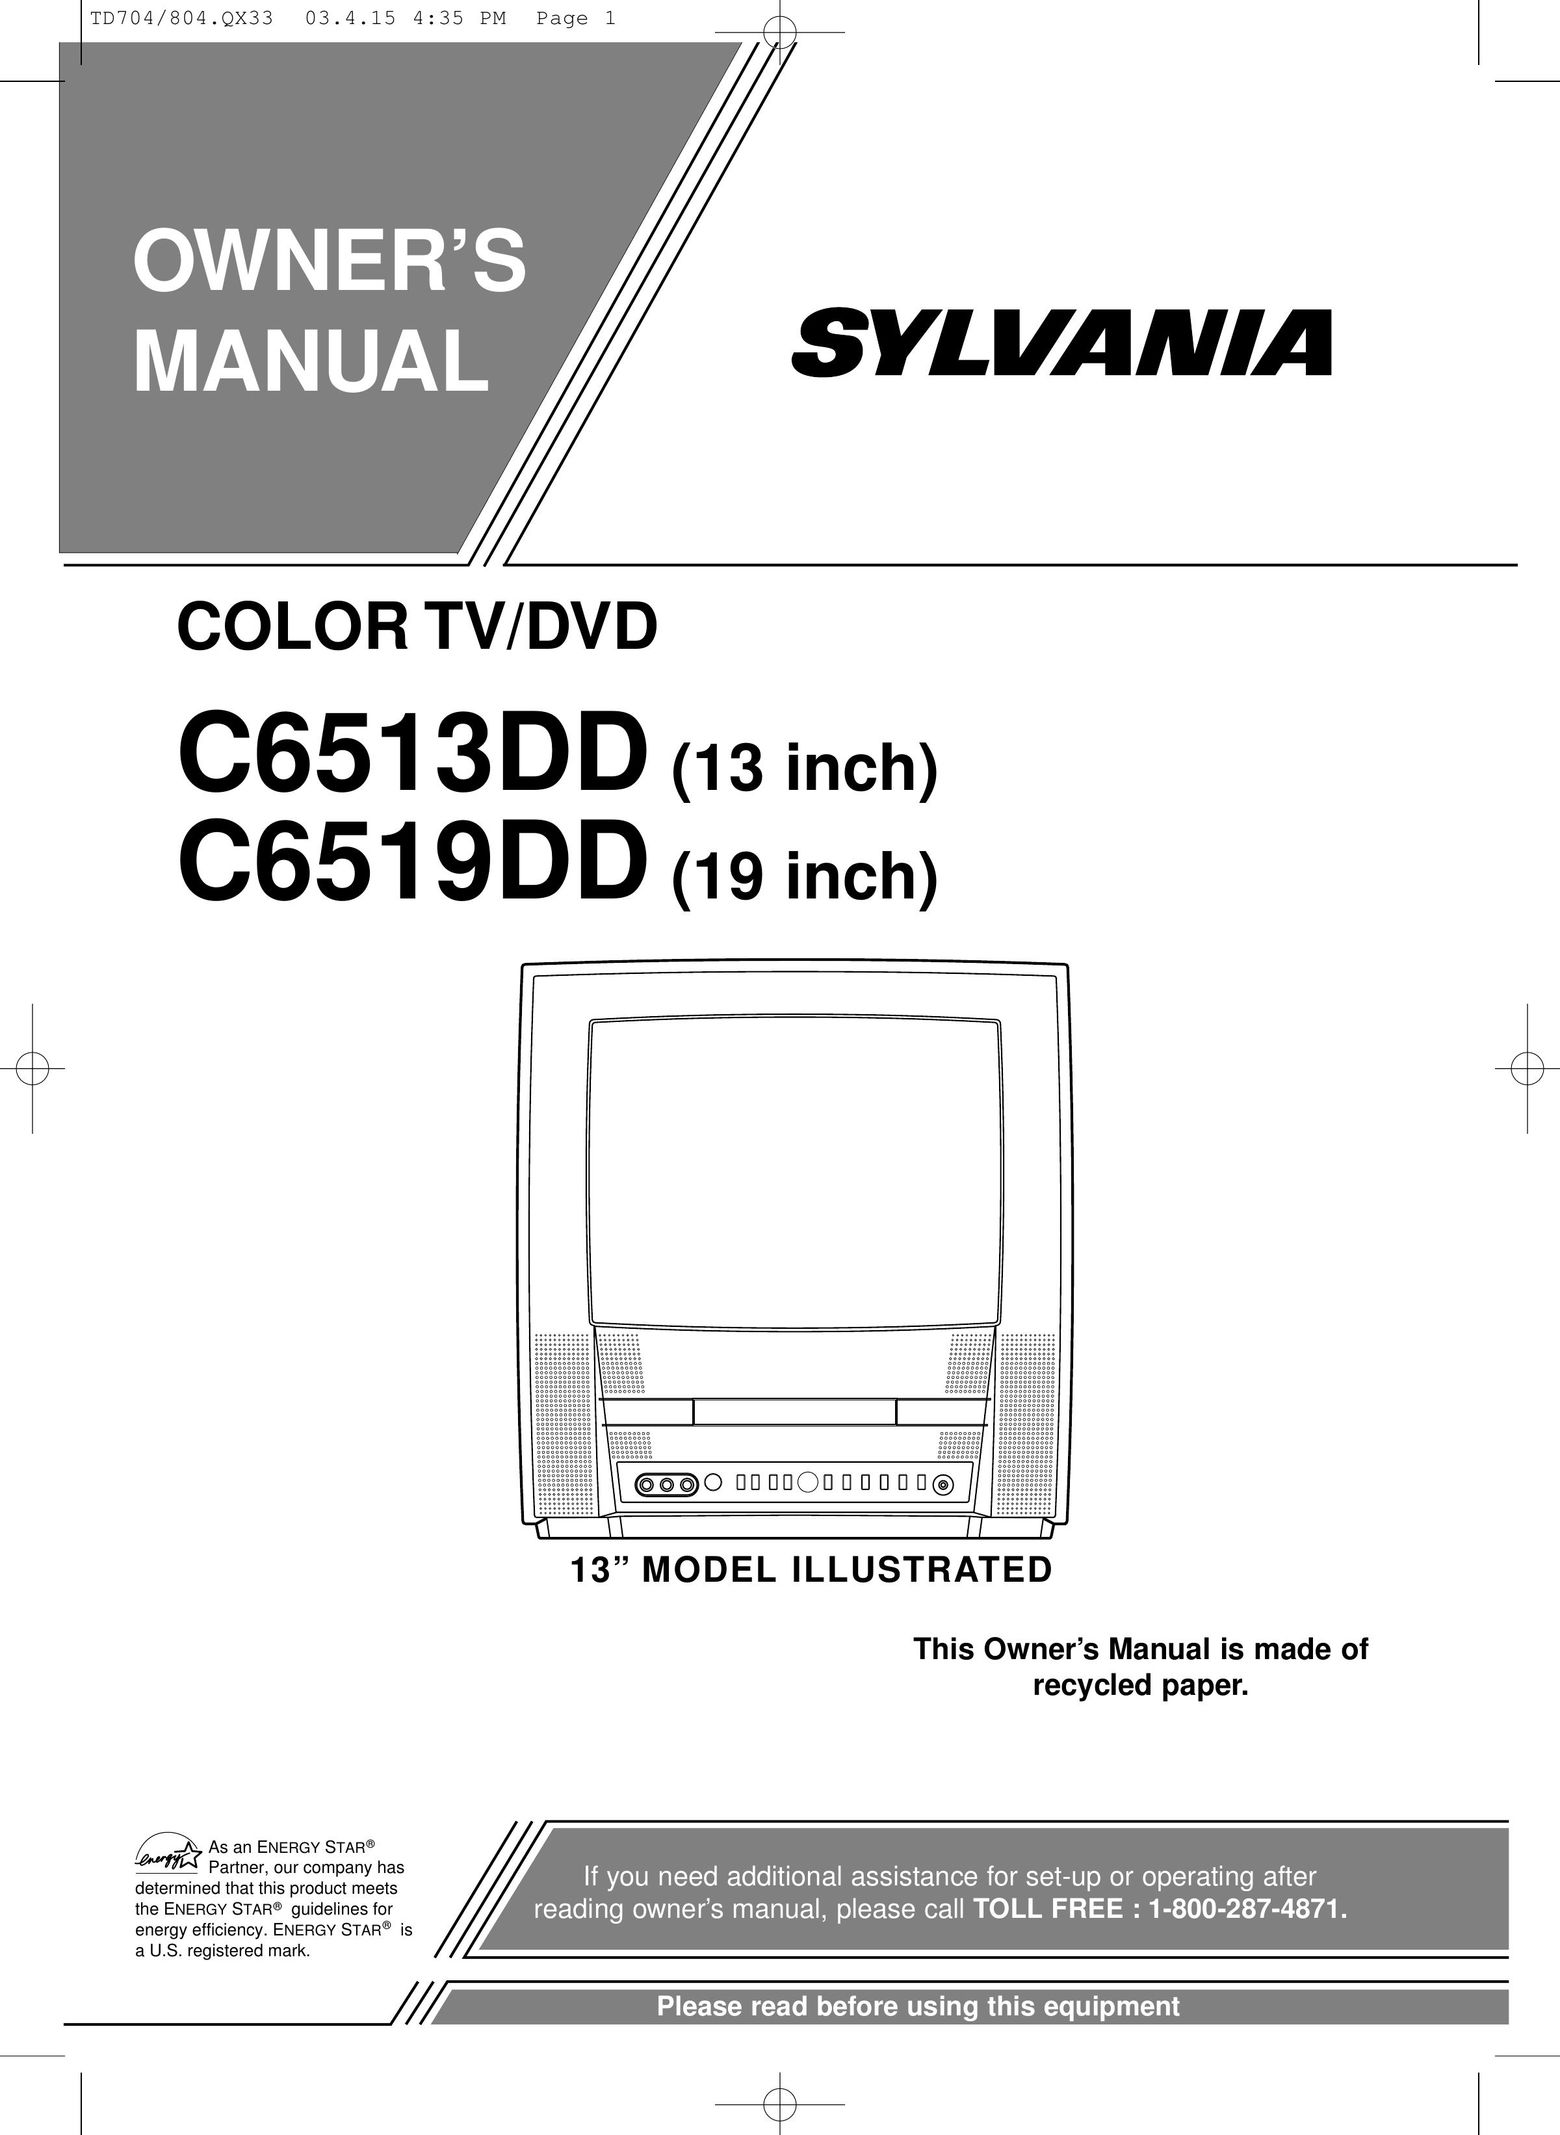 Sylvania C6513DD TV DVD Combo User Manual